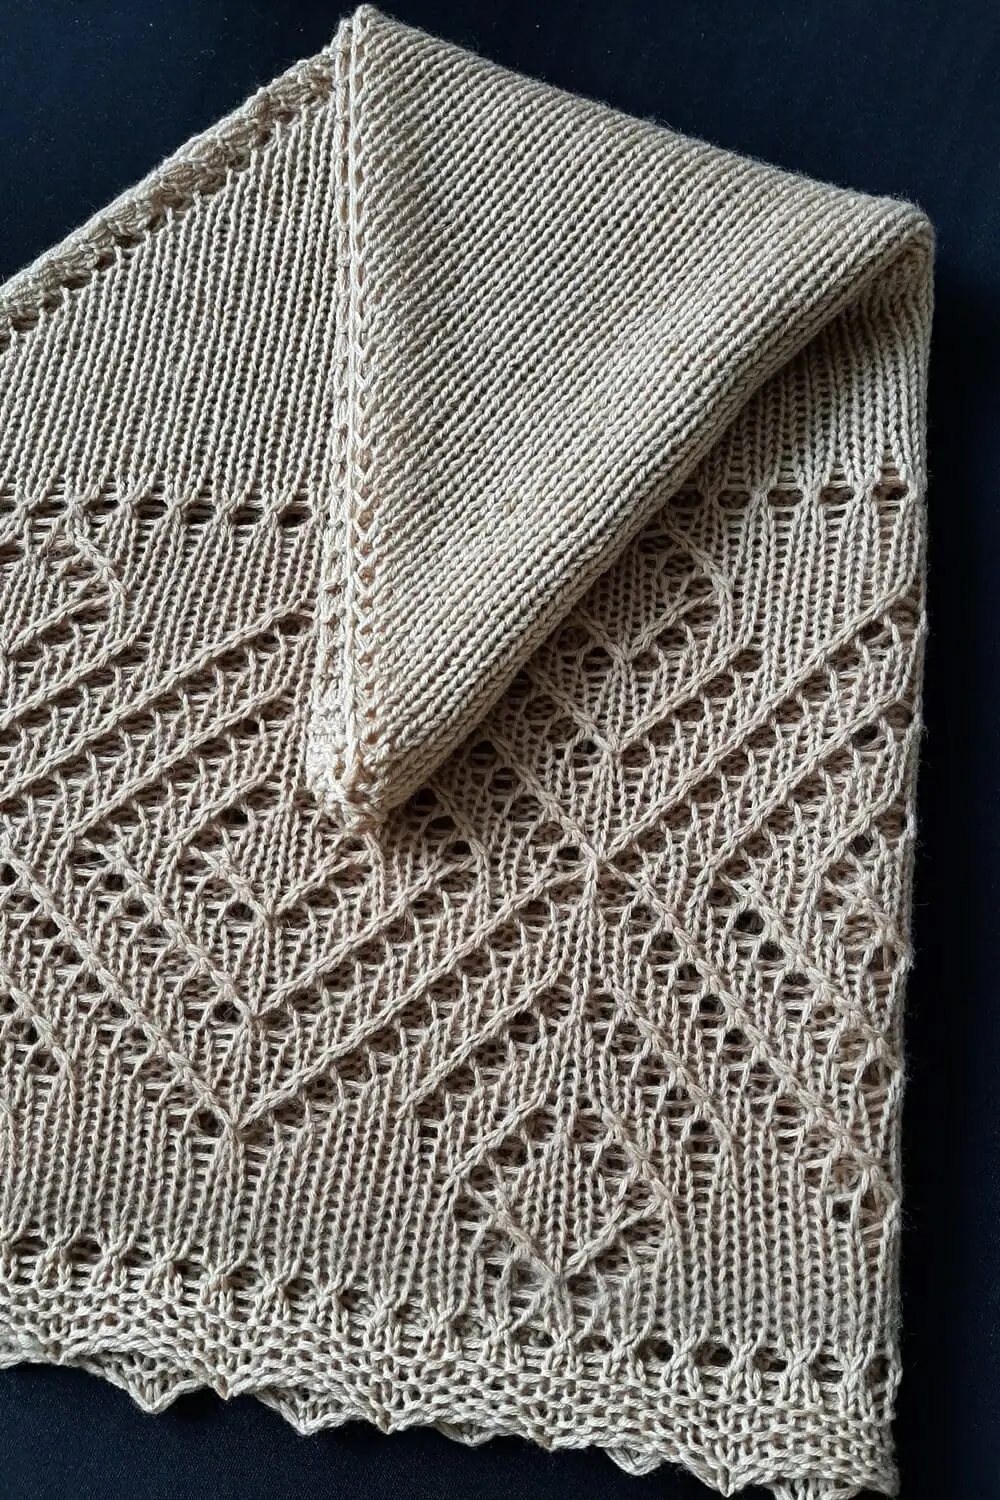 Folded Brim Hat Knitting Pattern Slouchy shaped 3 sizes